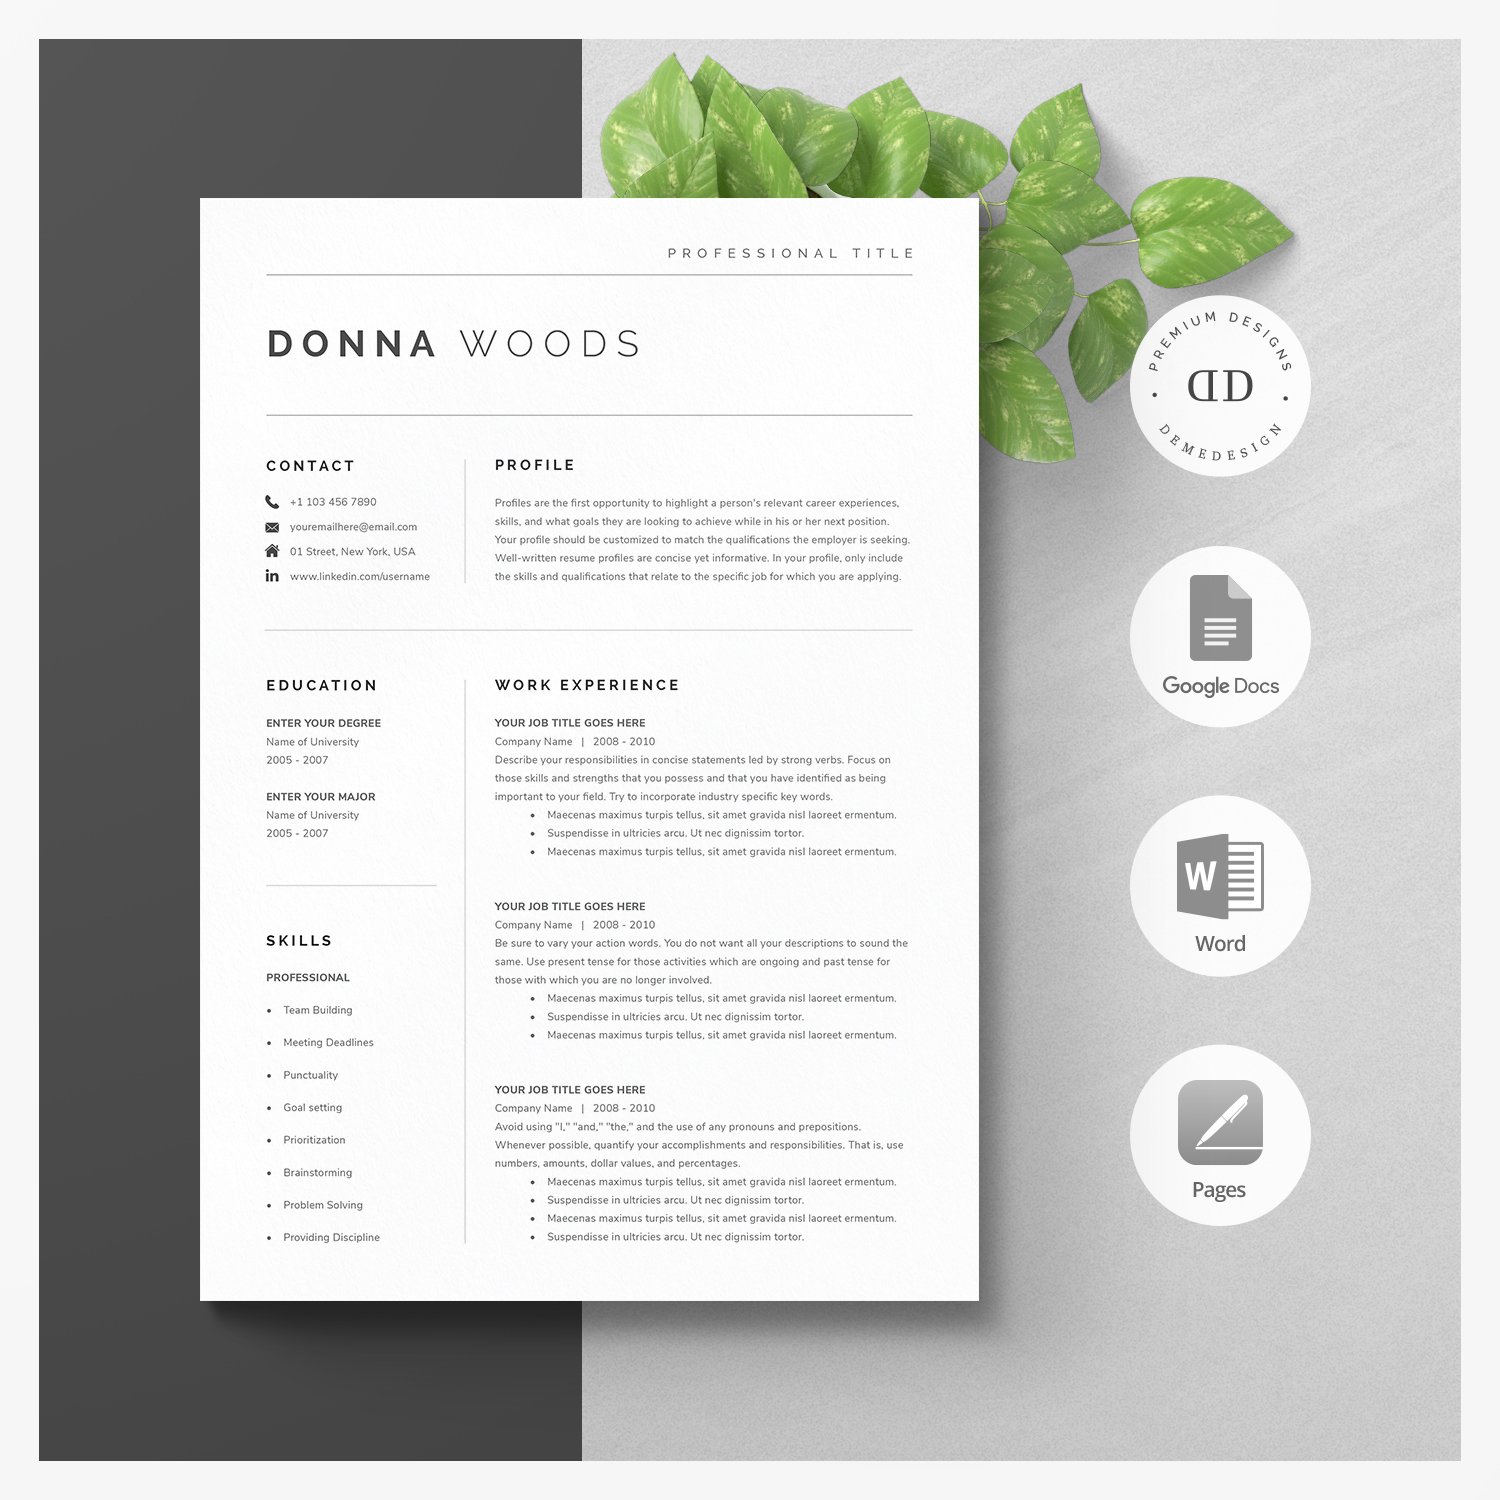 Modern Resume Template Kit cover image.